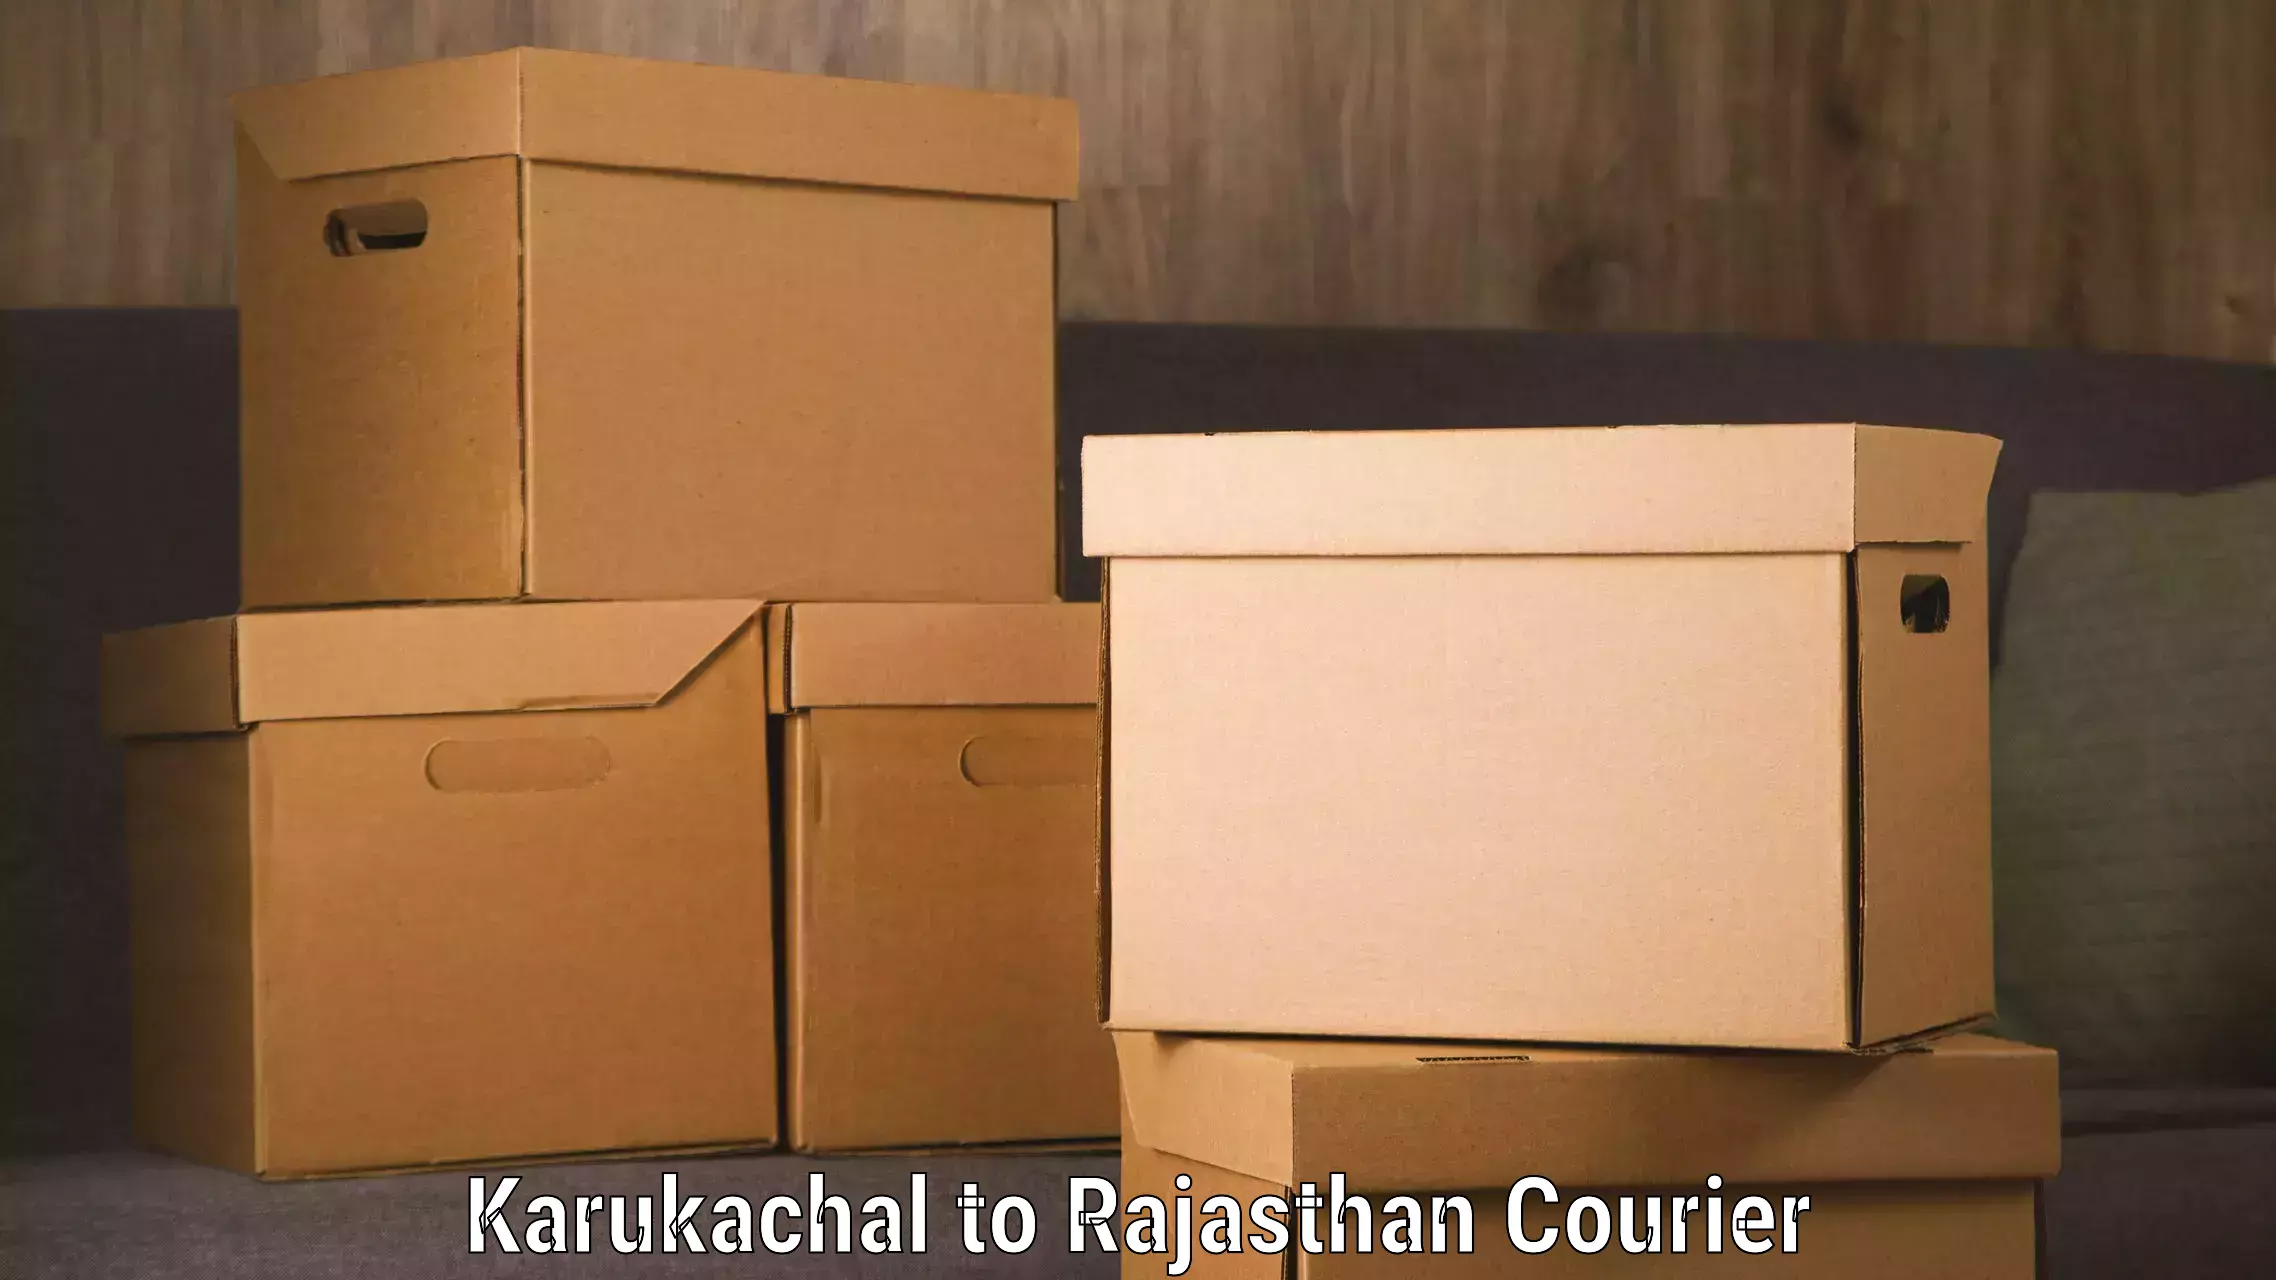 Professional courier handling Karukachal to Rajasthan